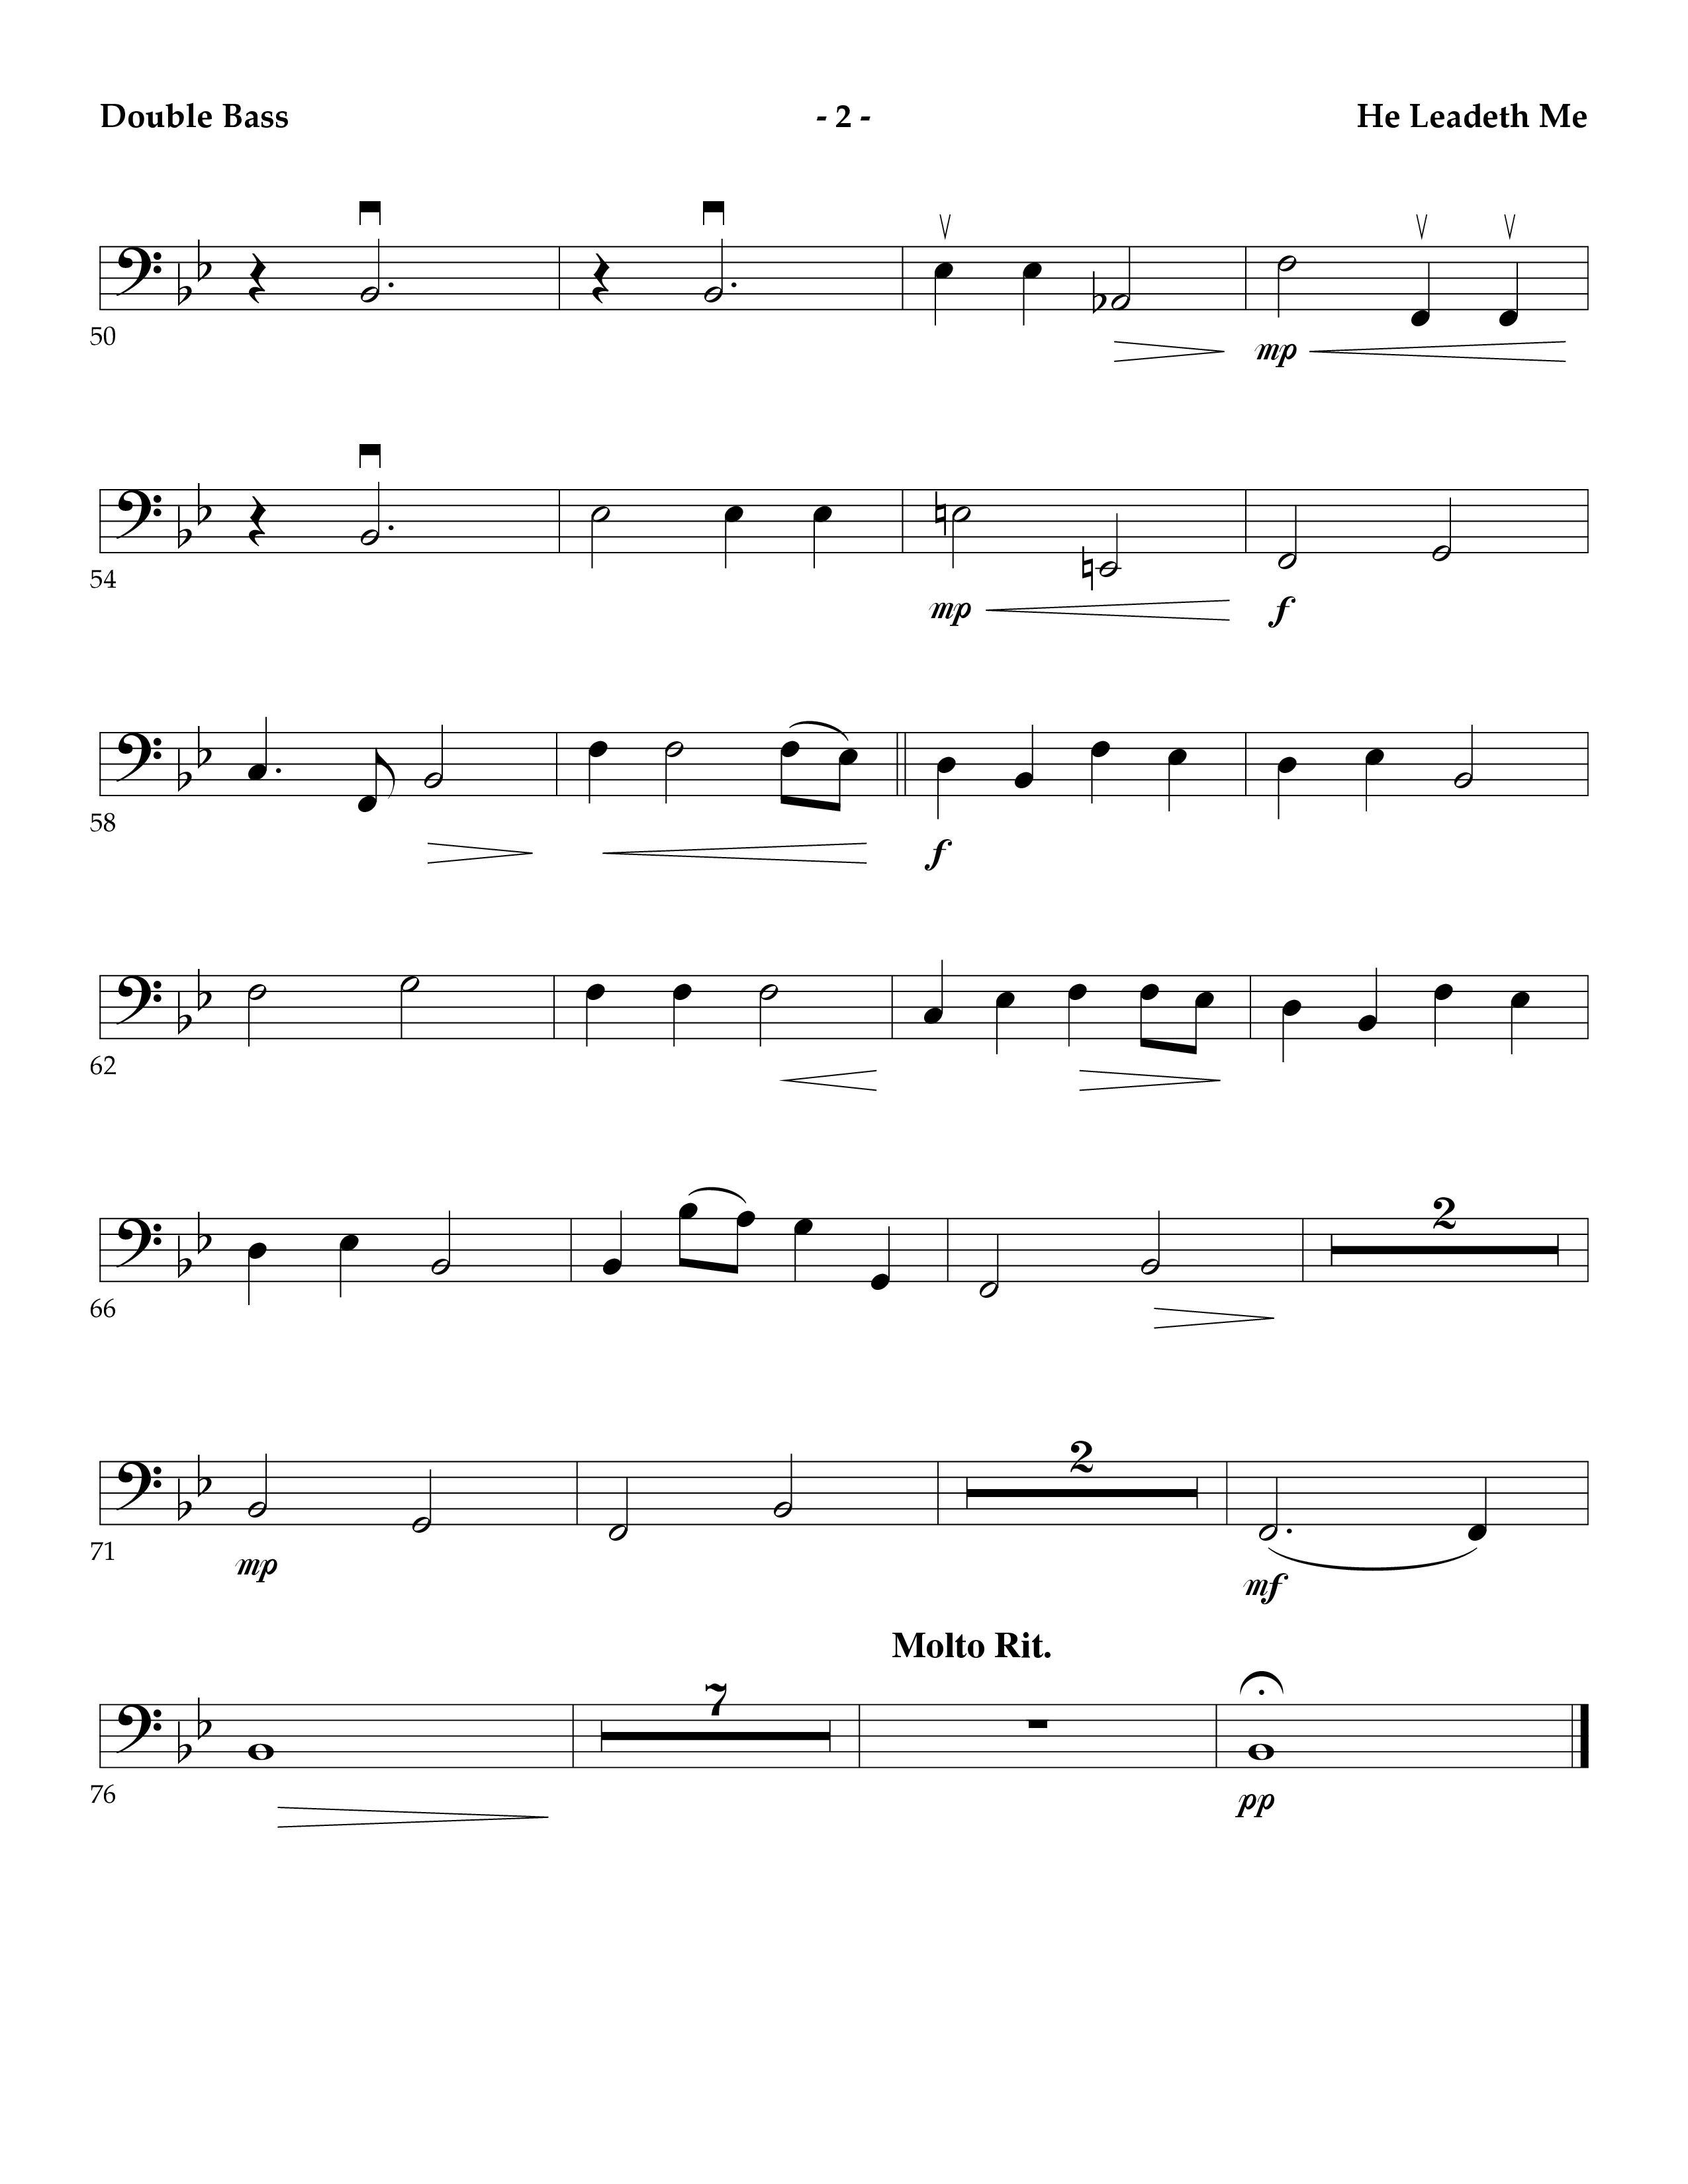 He Leadeth Me (Instrumental) Double Bass (Lifeway Worship / Arr. Mark Johnson)